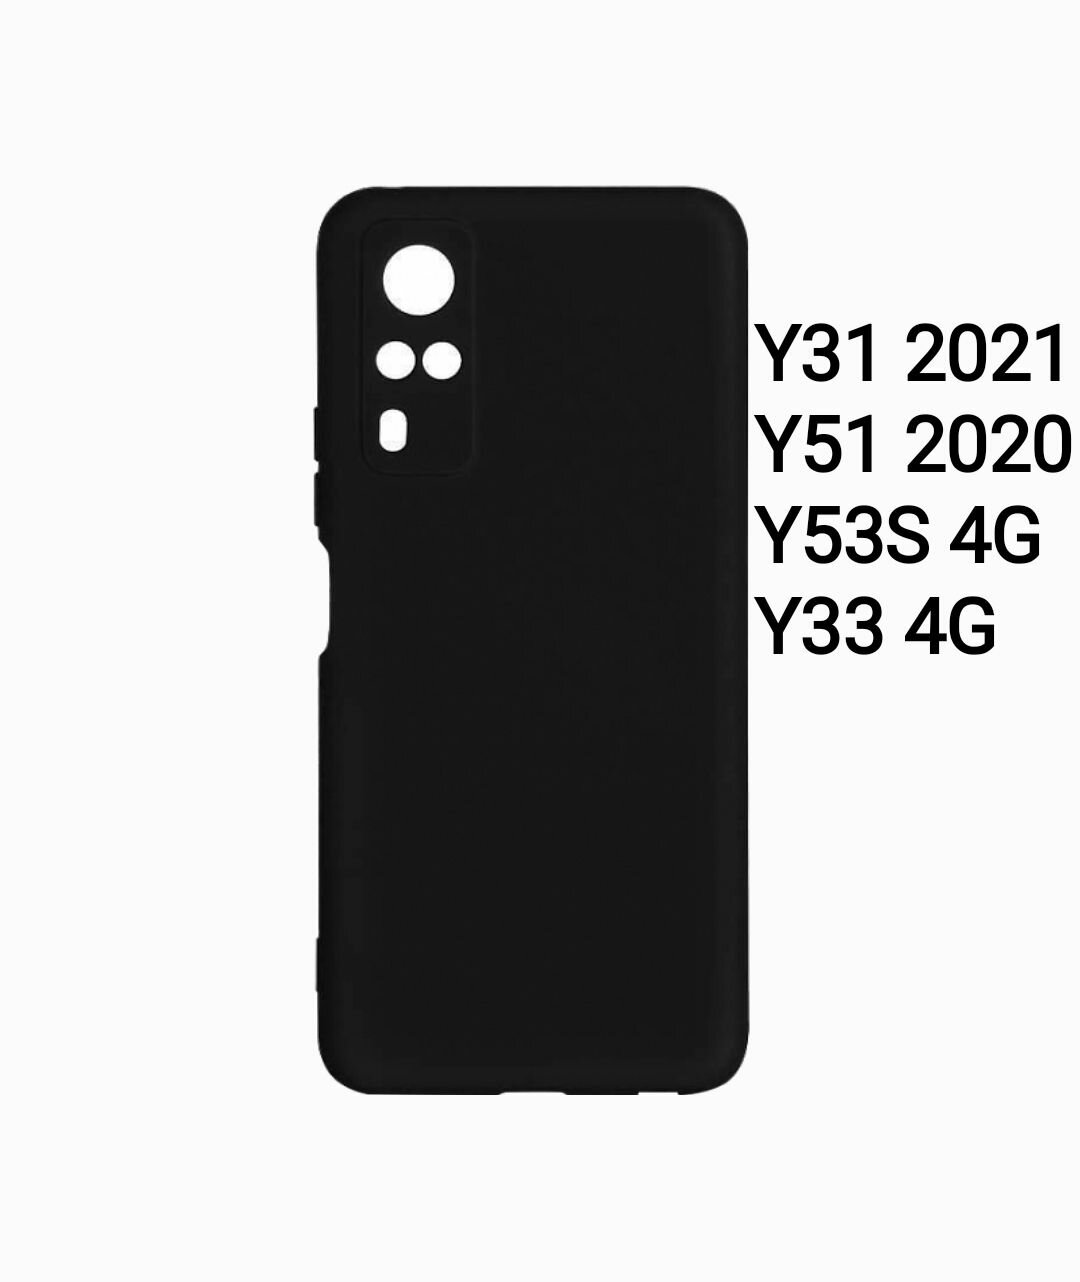 Vivo Y31 2021 / Vivo Y51 2020 / Y53S 4G / Y33 4G силиконовый чёрный чехол для виво у33 у31 у51 у53с накладка бампер софт тач soft Touch